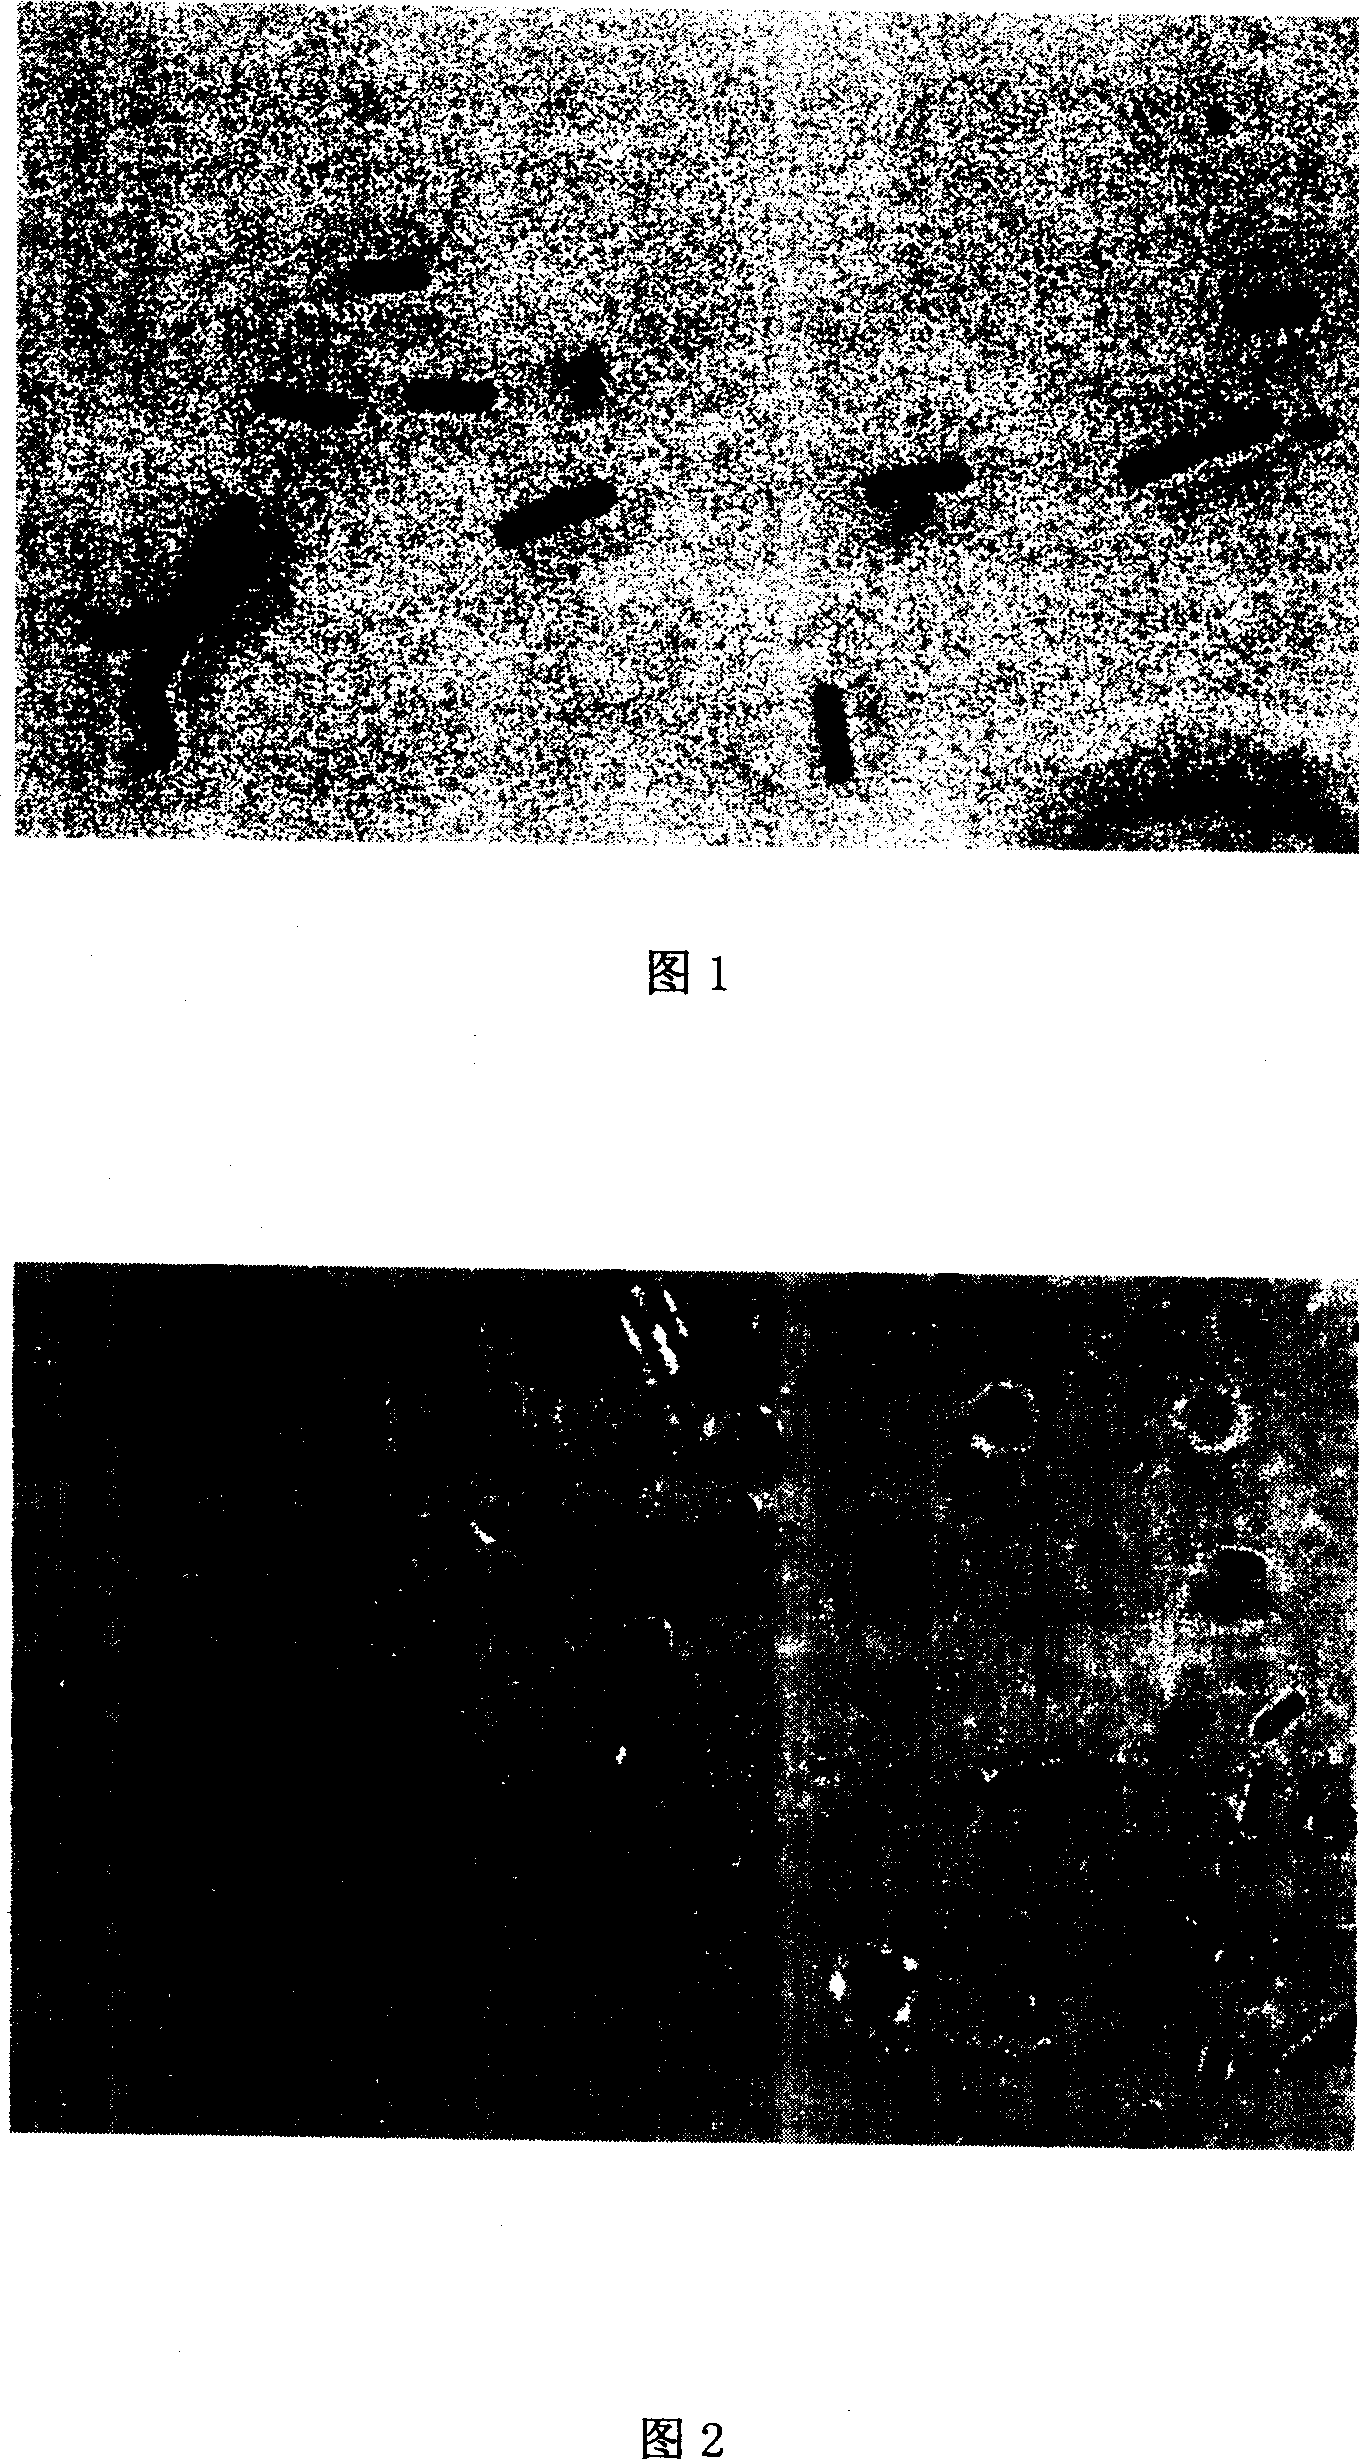 Use of Bacillus subtilis (Ehrenberg)Cohn in preparing 3-hydroxy butanone